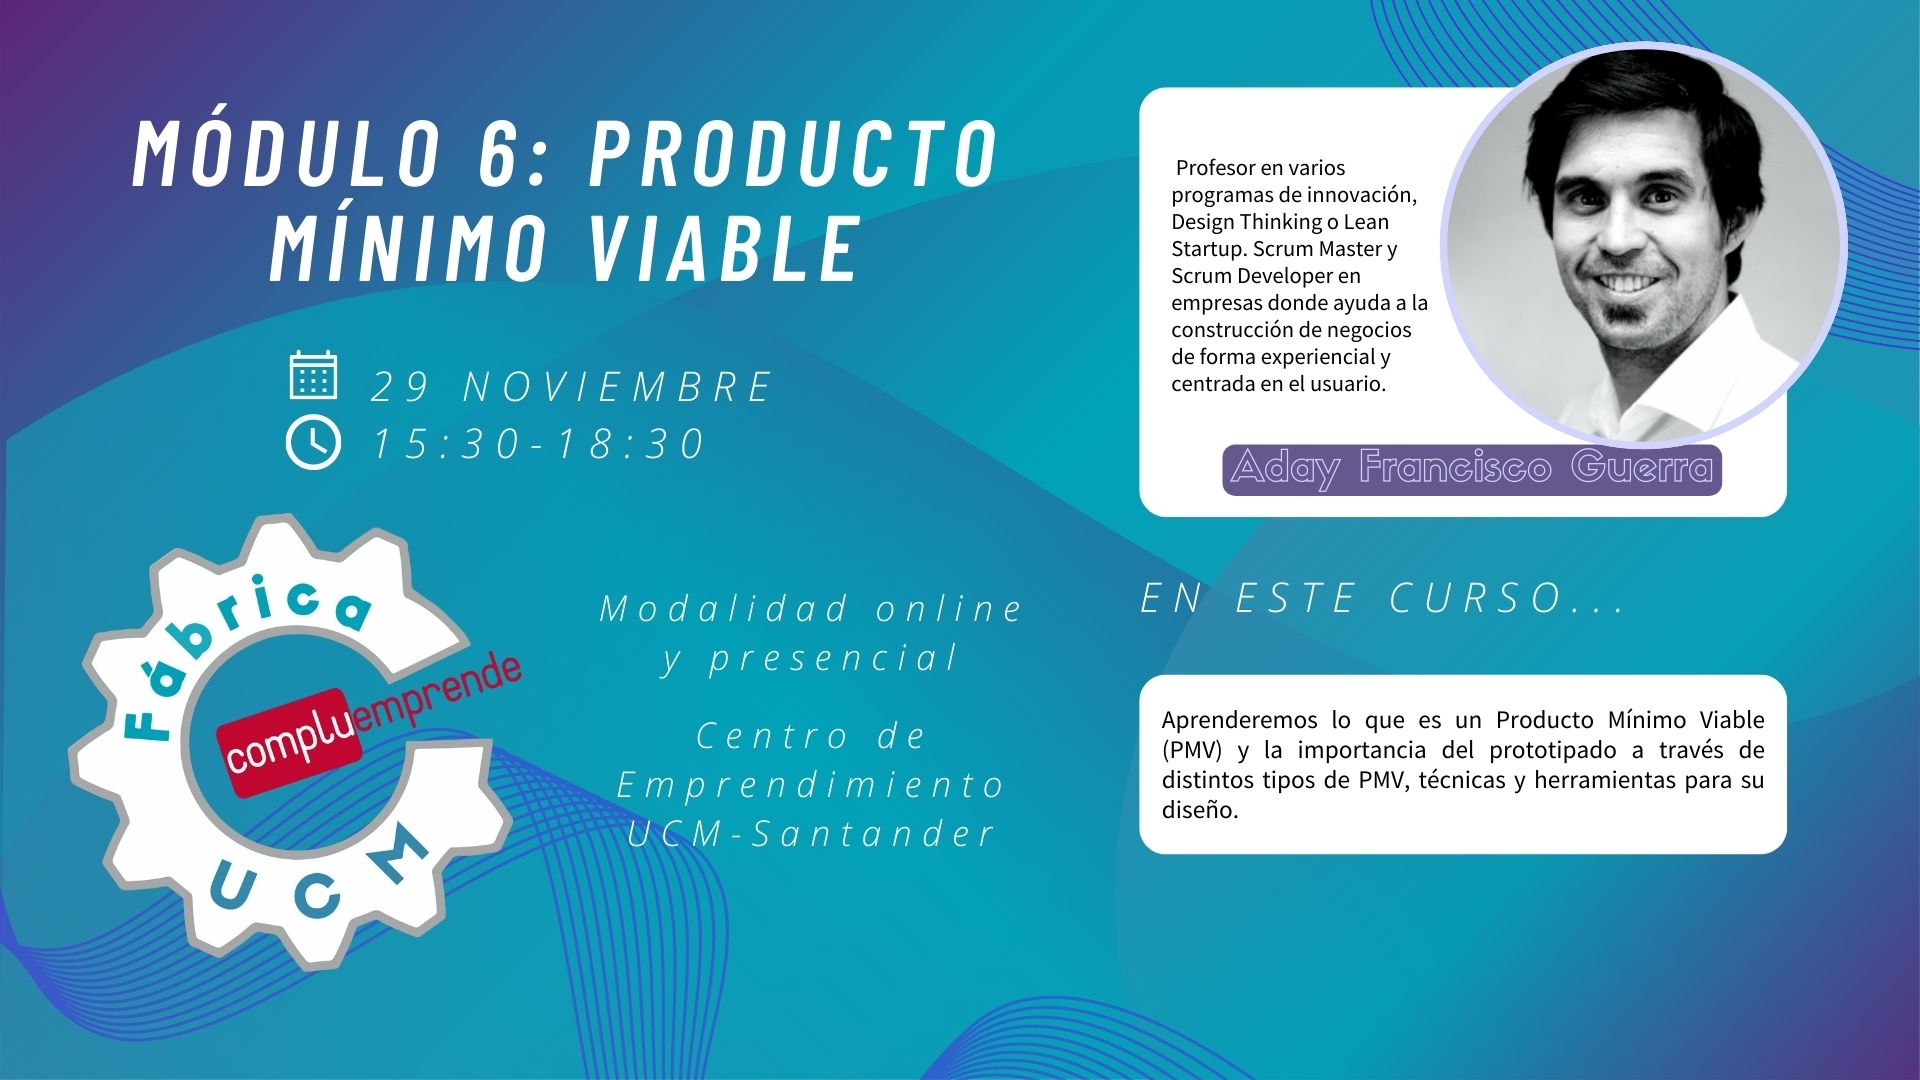 Fábrica UCM - Módulo 6: Producto mínimo viable con Aday Francisco Guerra